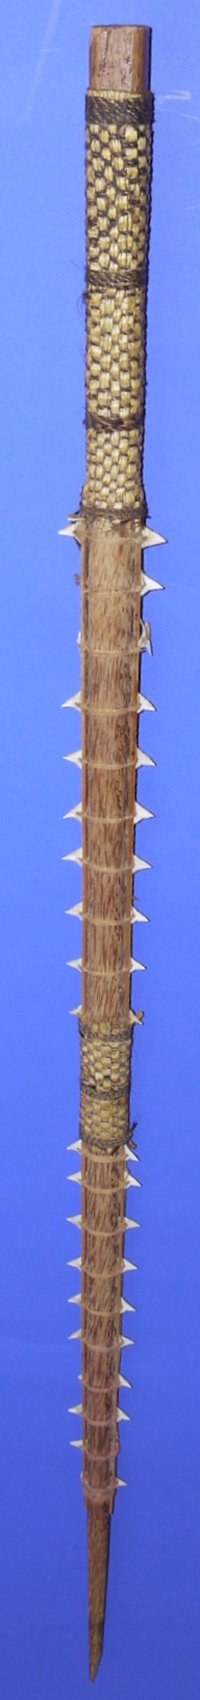 Gilbert Islands Shark’s Tooth Kiribati Tebute Sword